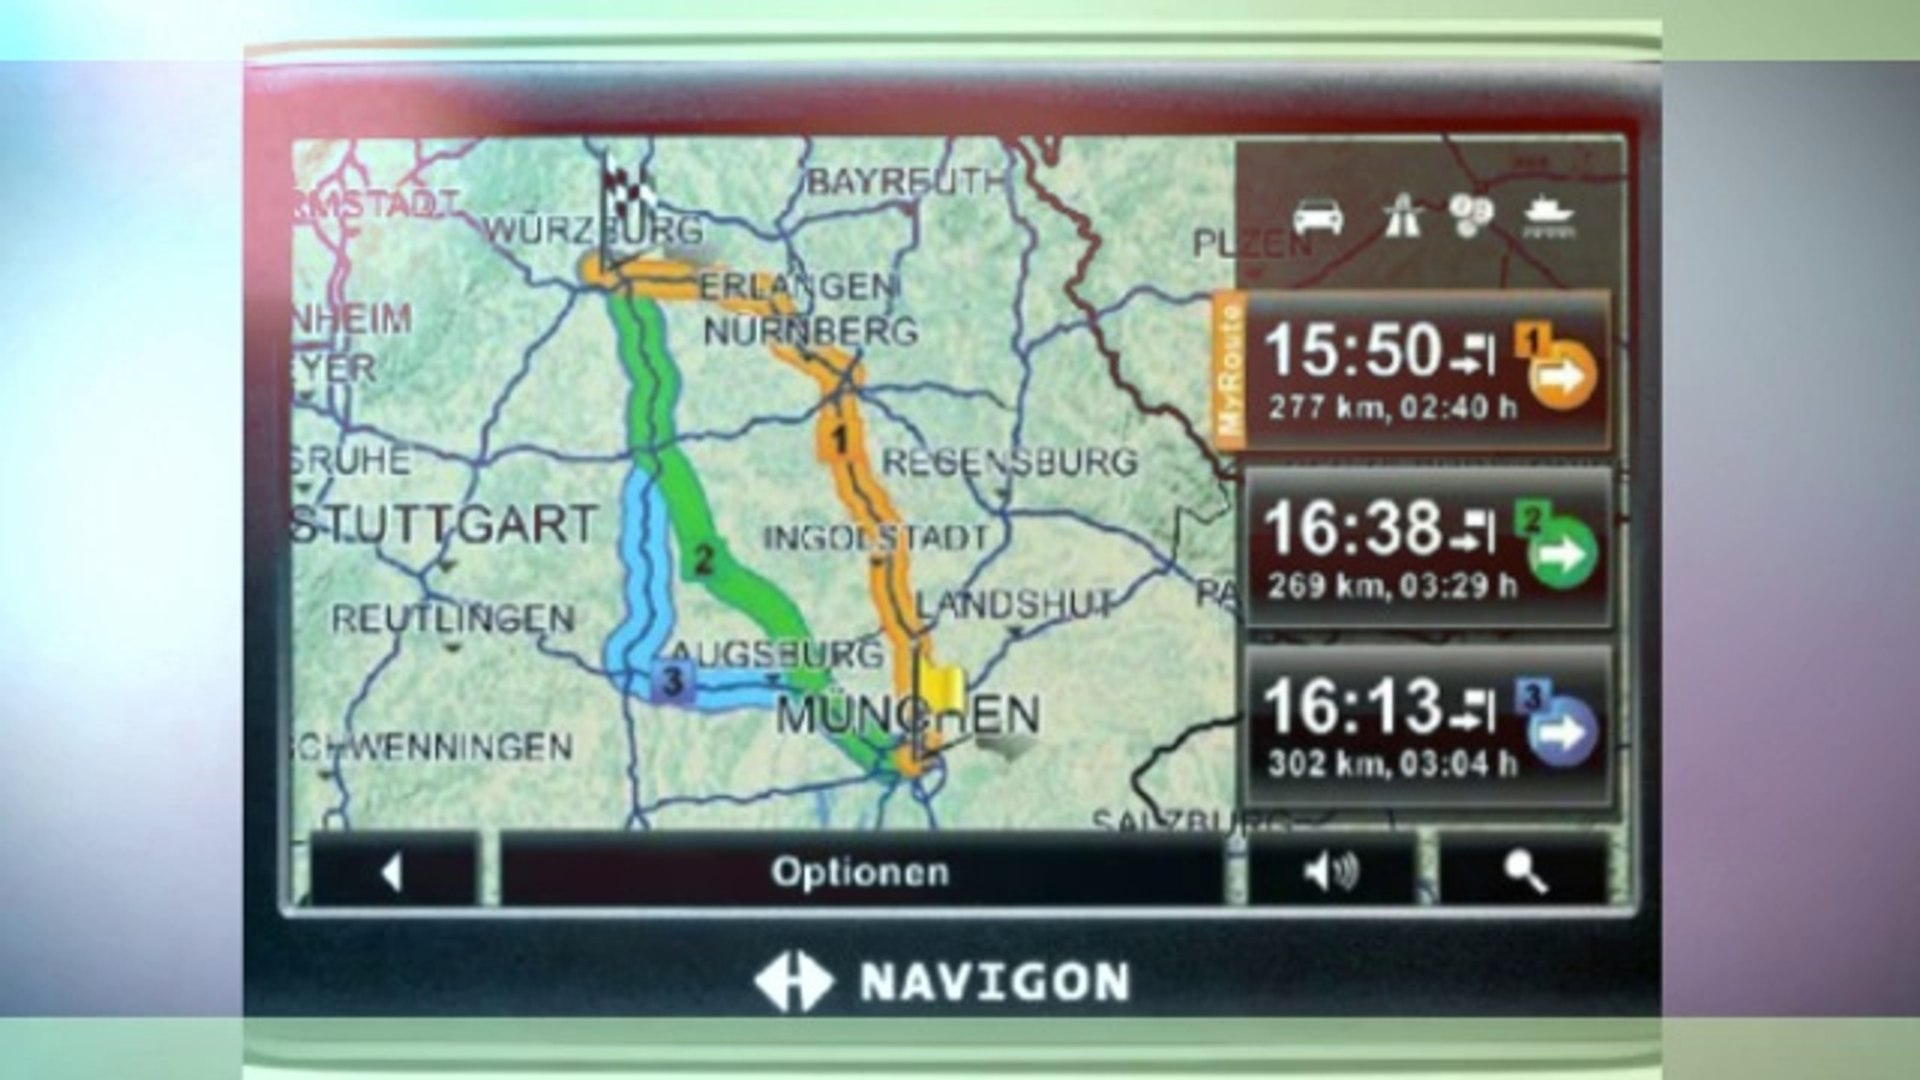 5 Zoll 12,7 cm Touchscreen Display, Europa 44, TMC, Navigon Flow, Text-to-Speech, Aktiver Fahrspurassistent Navigon 72 Plus Tragbares Navigationssystem 